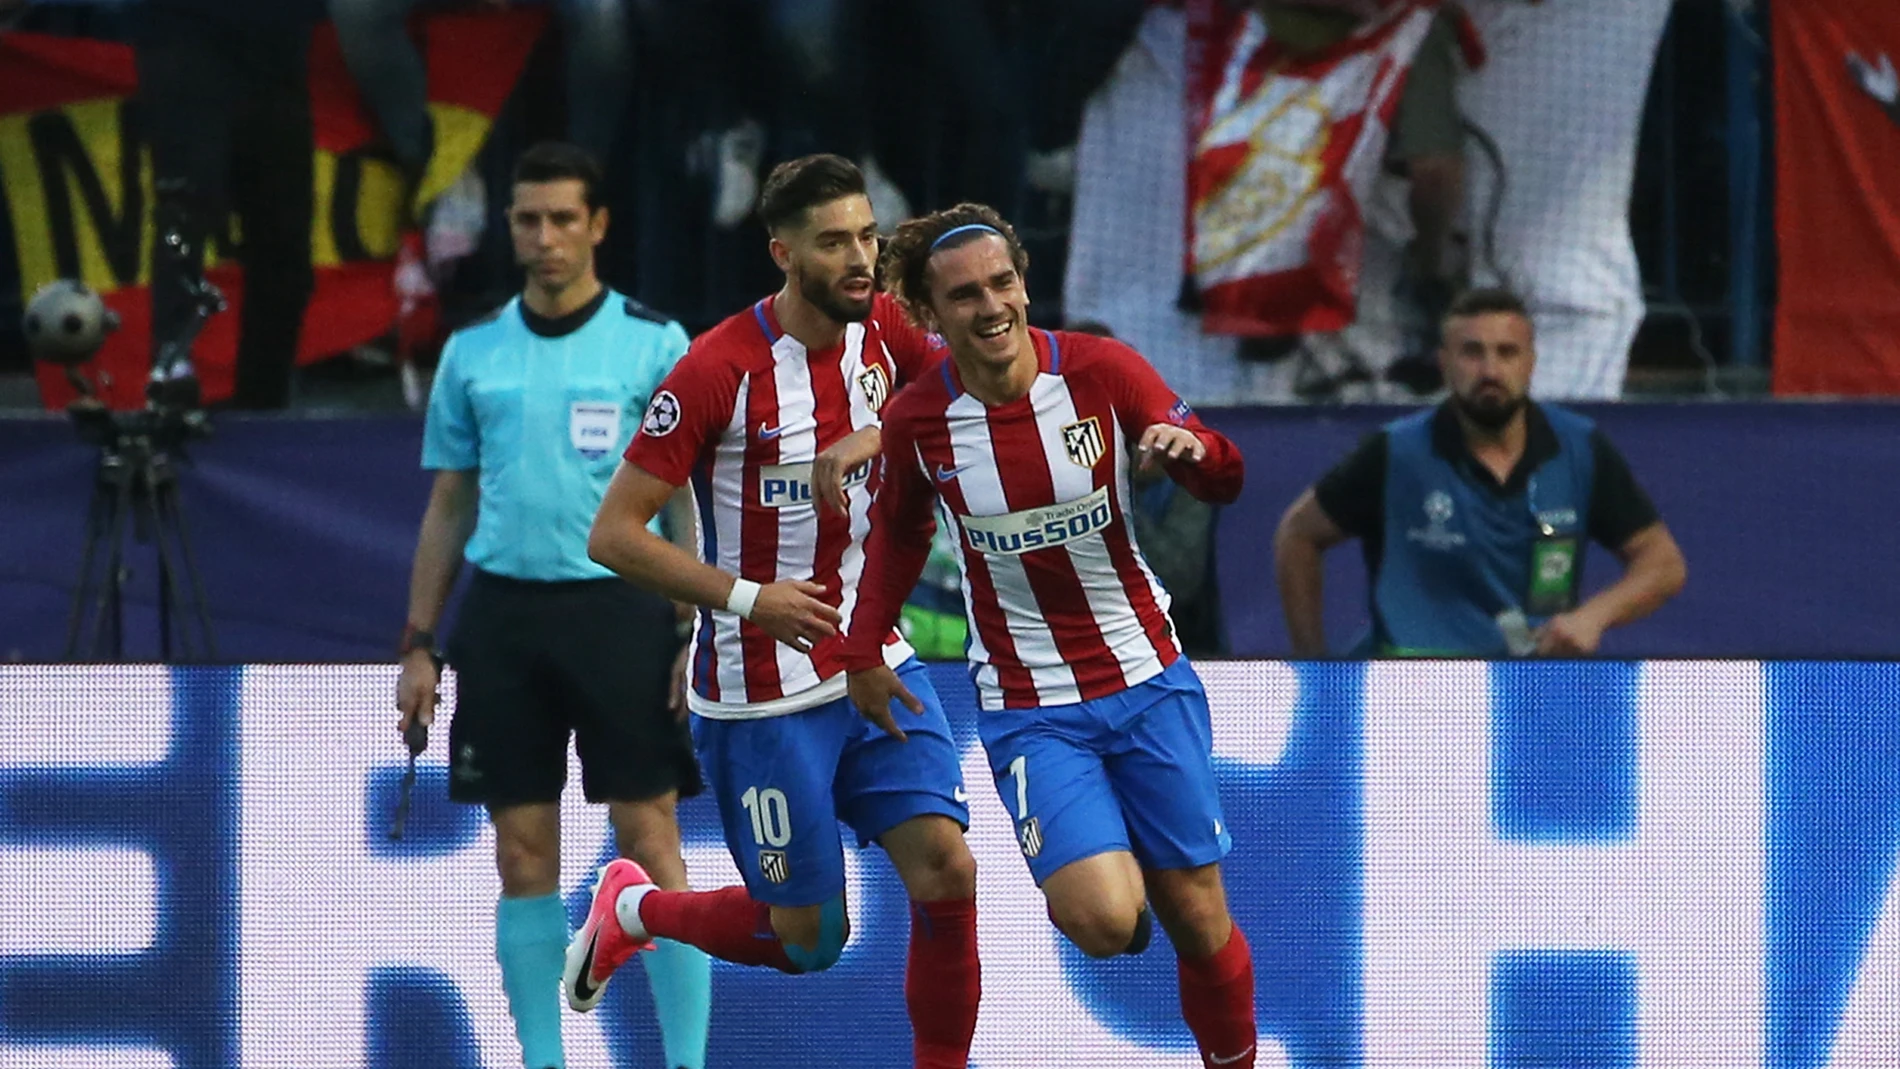 Griezmann celebrando su gol al Madrid